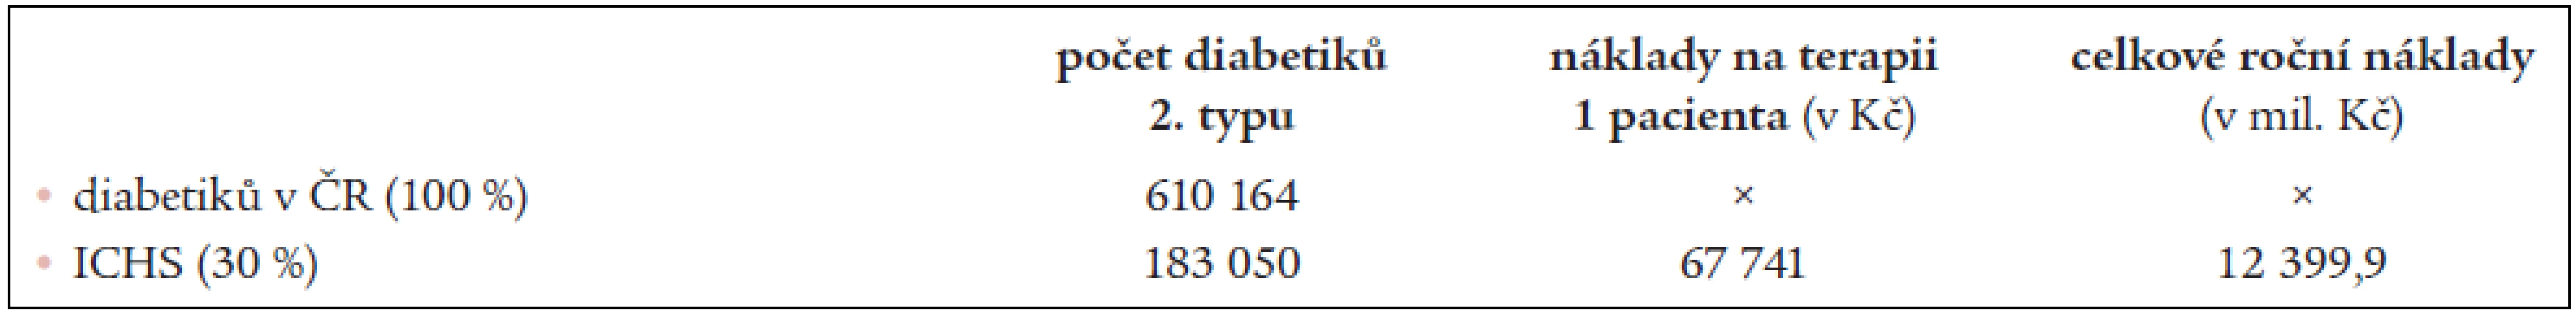 Odhad ročních nákladů na terapii ICHS u pacientů s diabetem.